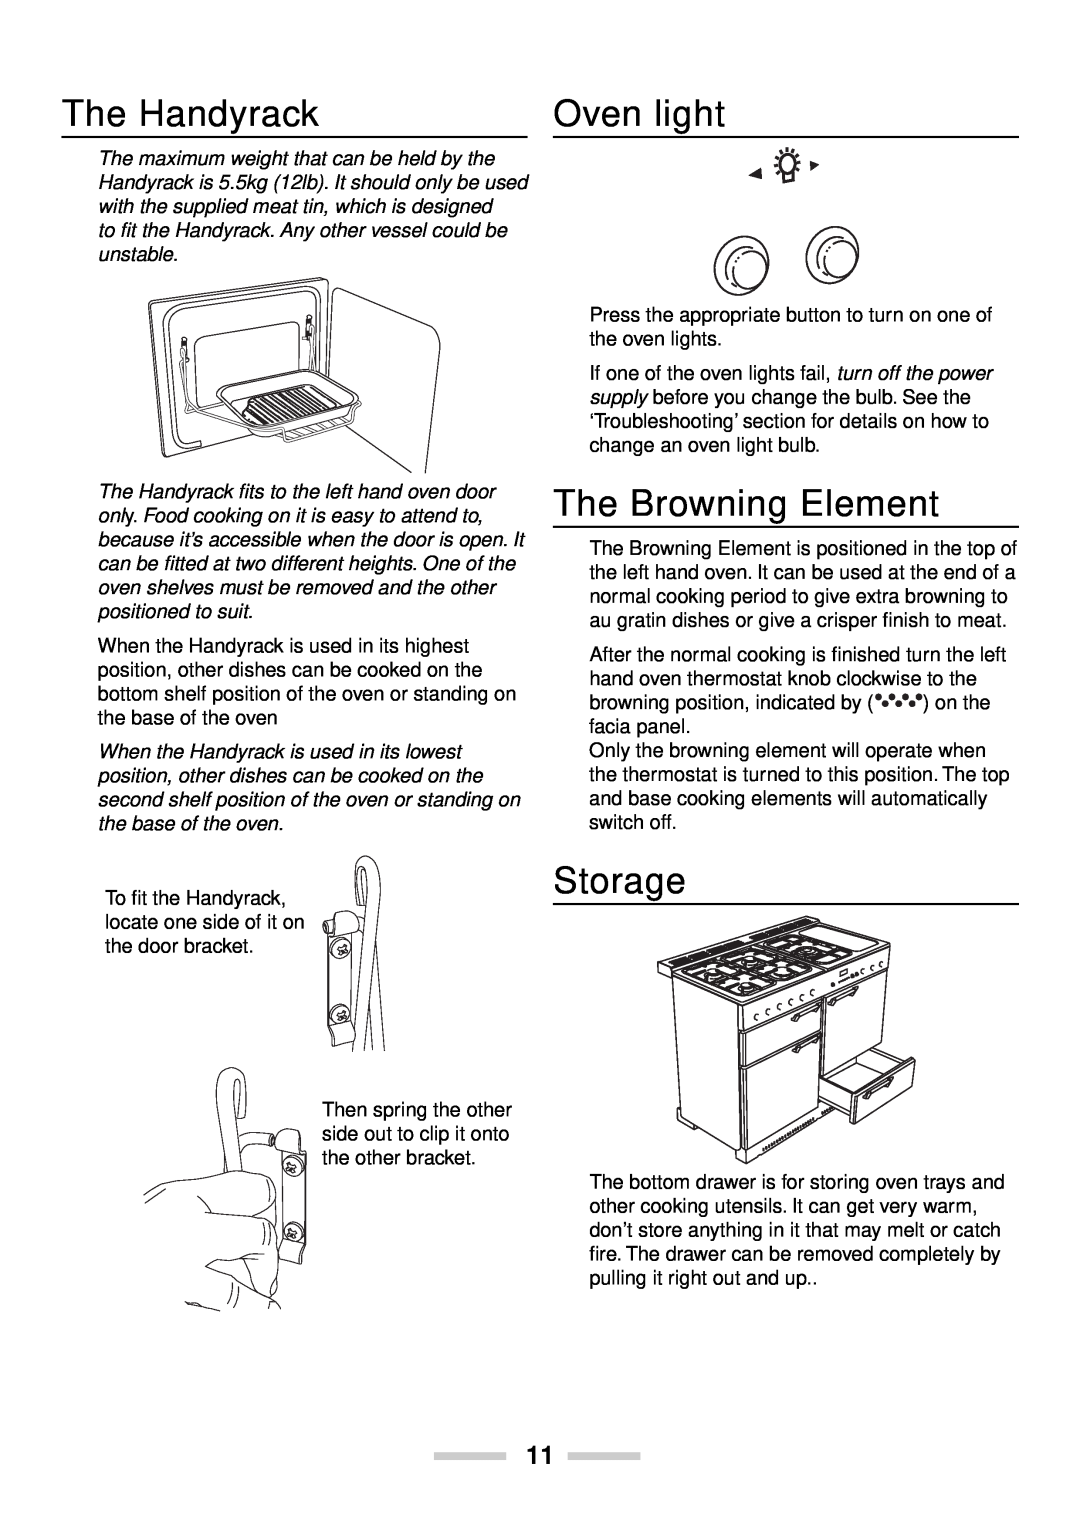 Rangemaster U102210-04 manual The Handyrack, Oven light, The Browning Element, Storage 